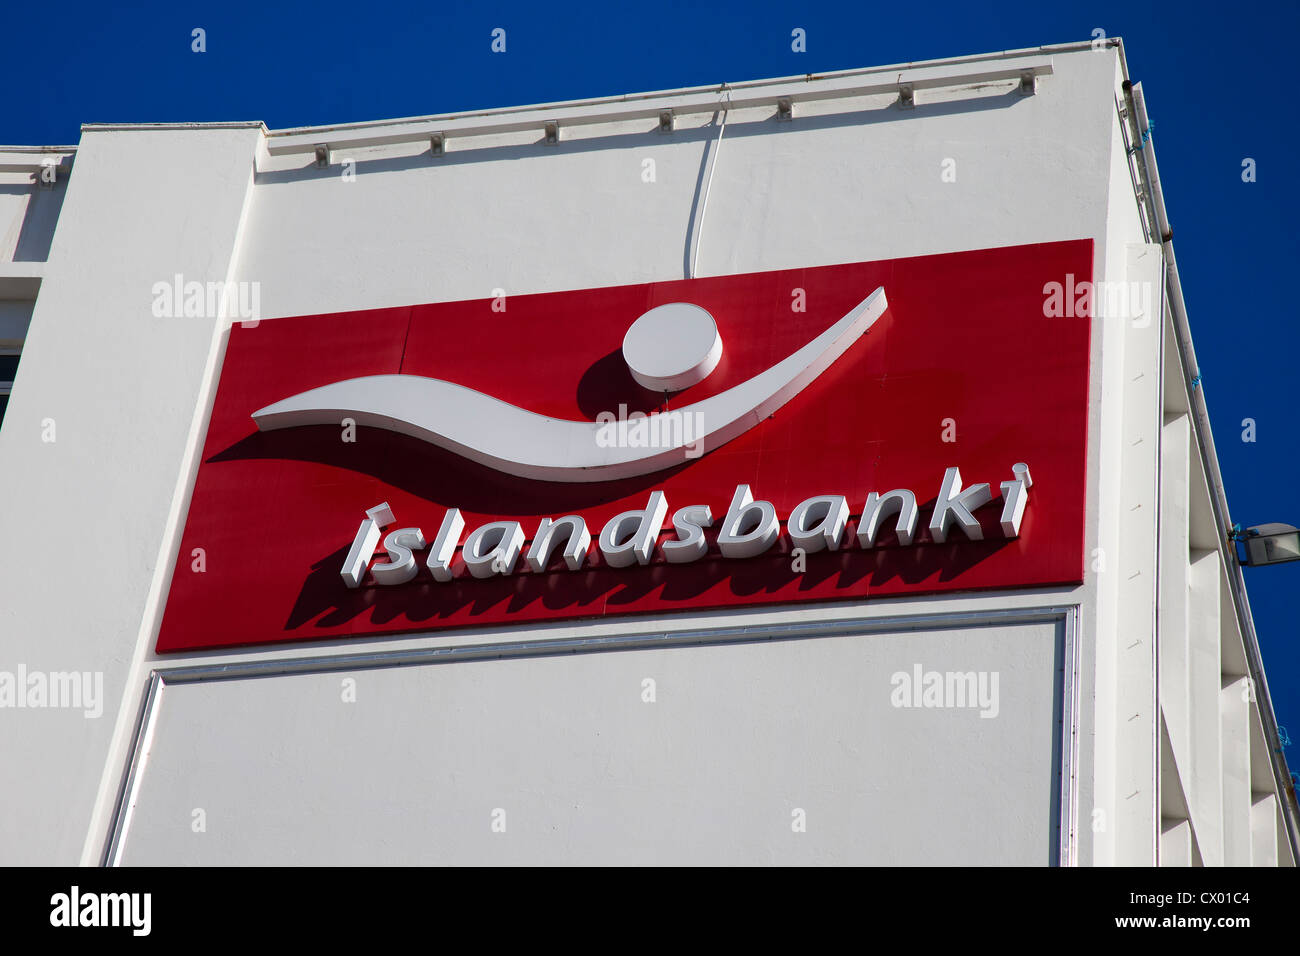 Die Island Bank "Islandbanki". Stockfoto